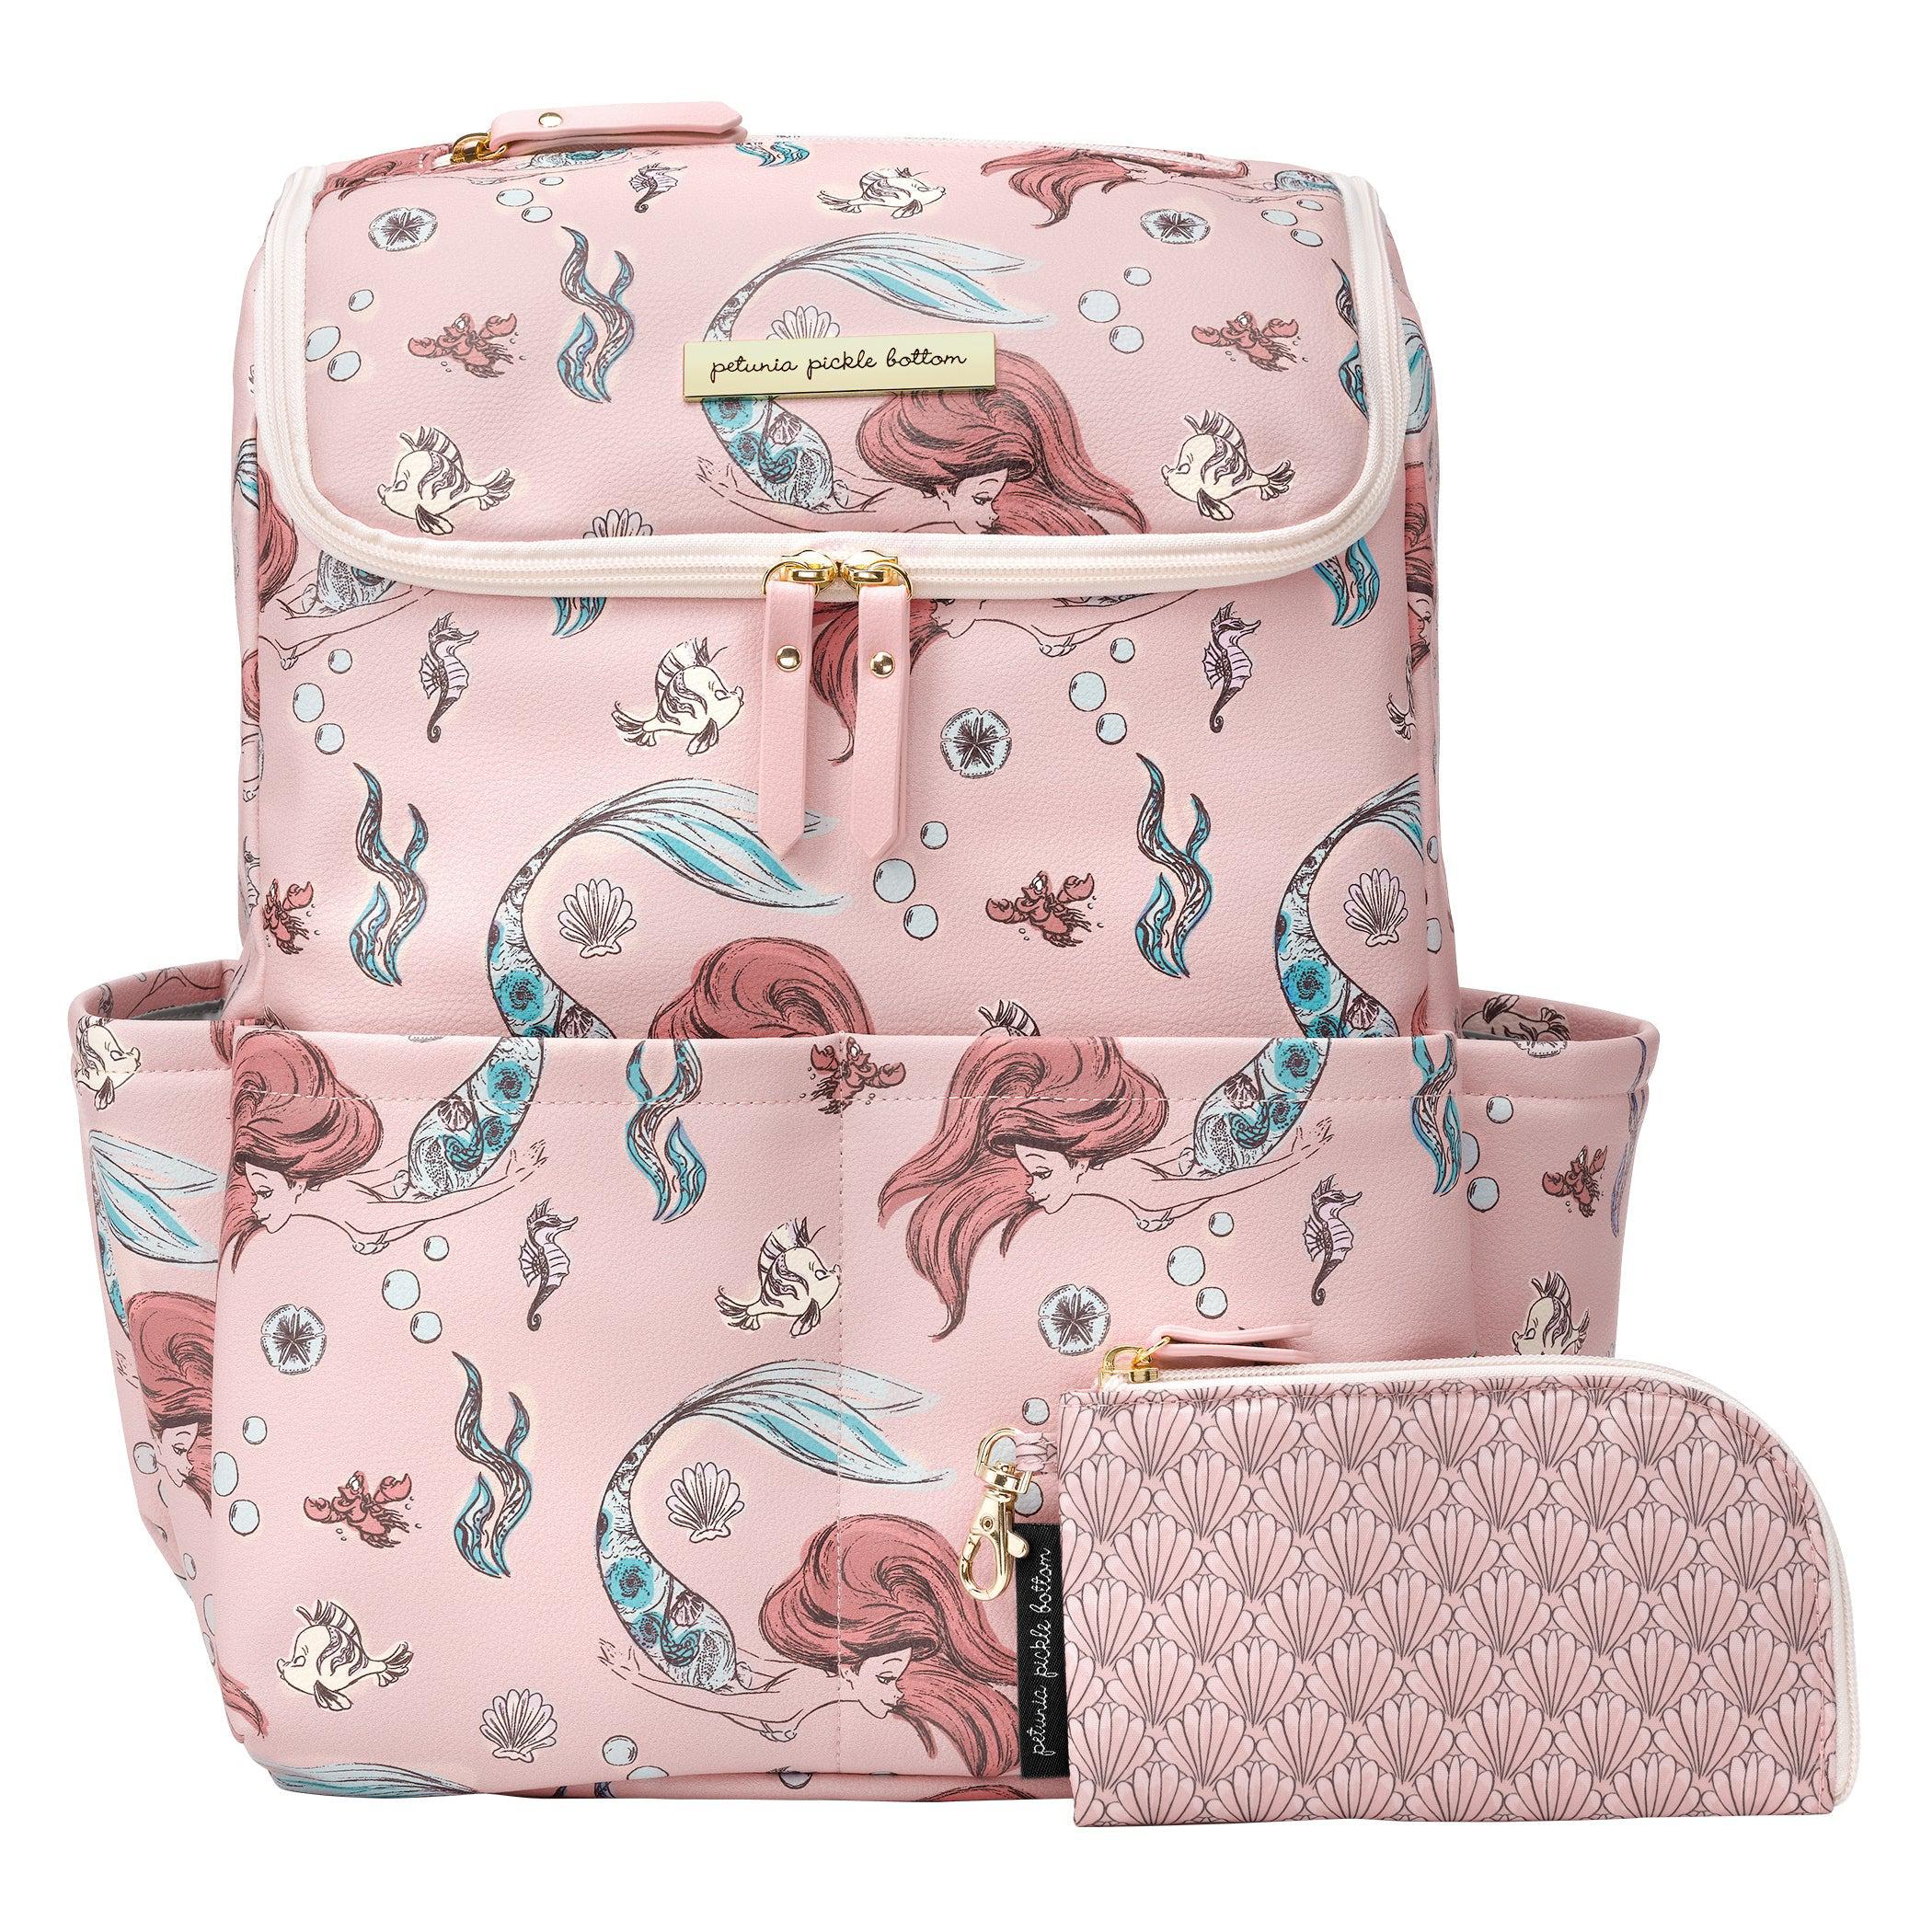 Petunia Pickle Bottom Baby Diaper Bag Backpack